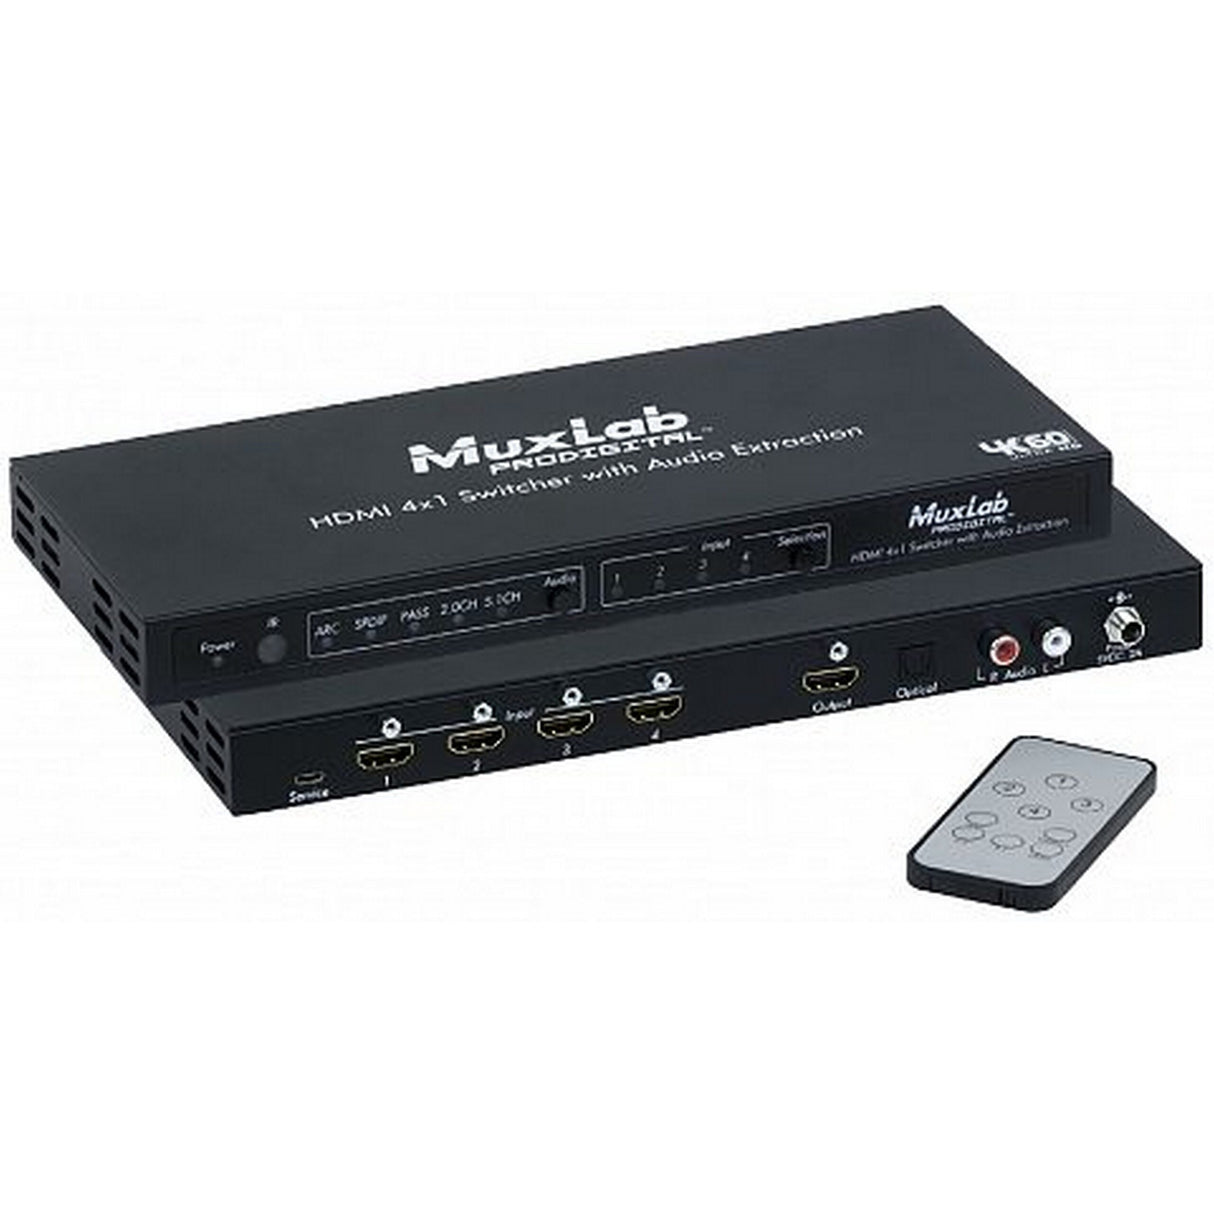 MuxLab 500437 HDMI 4 x 1 Switcher with Audio Extraction, 4K/60